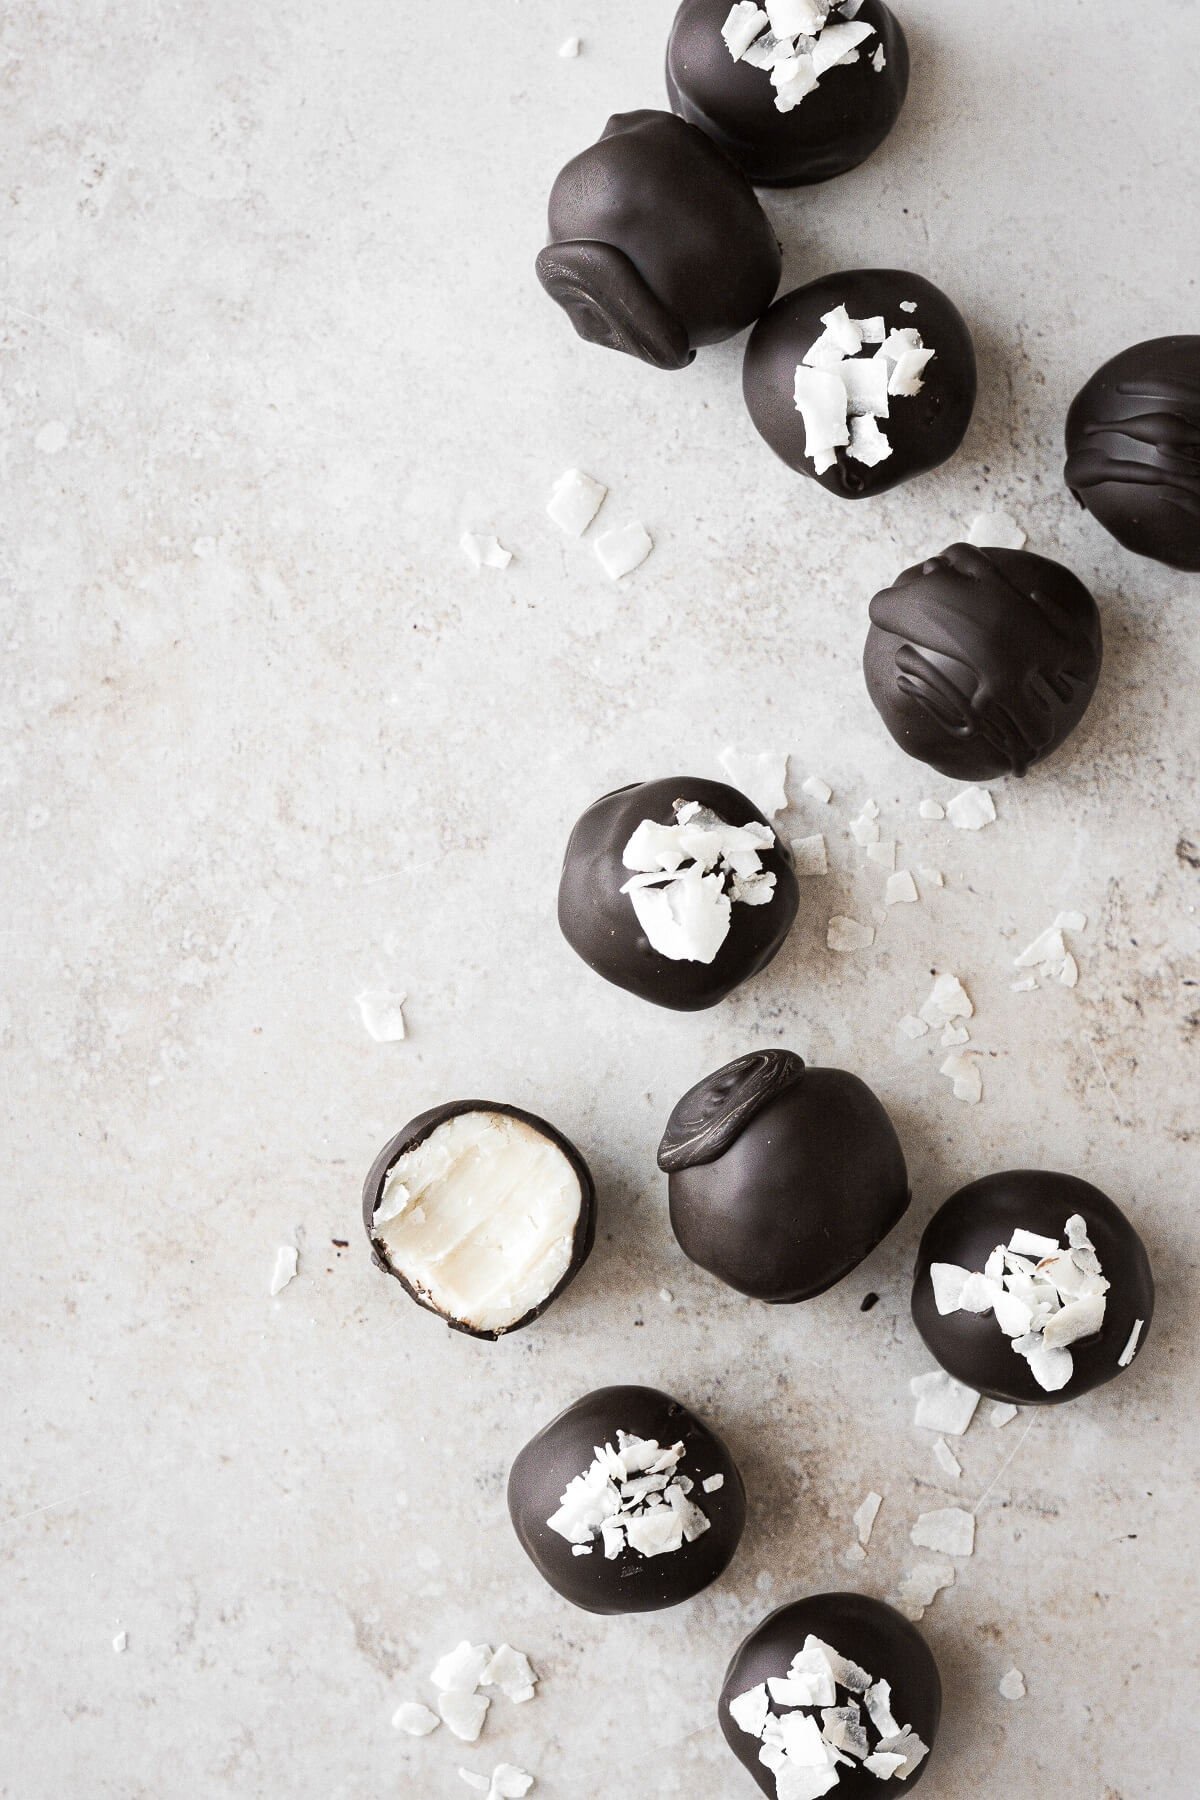 White chocolate coconut truffles coated in dark chocolate.